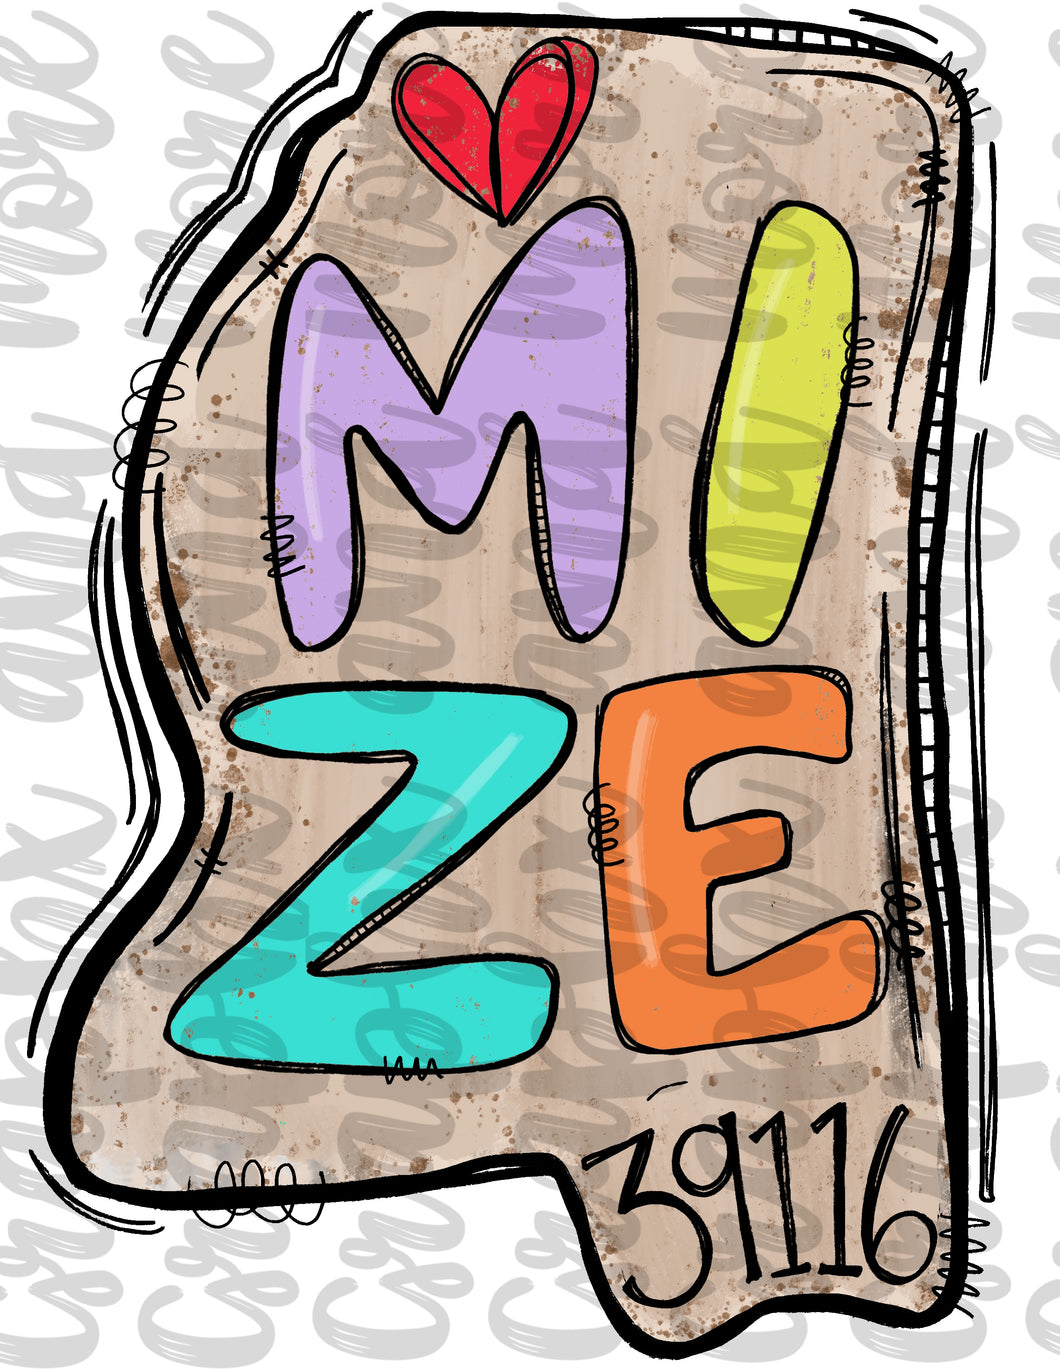 Mize MS 39116 PNG | Sublimation Design | Hand Drawn